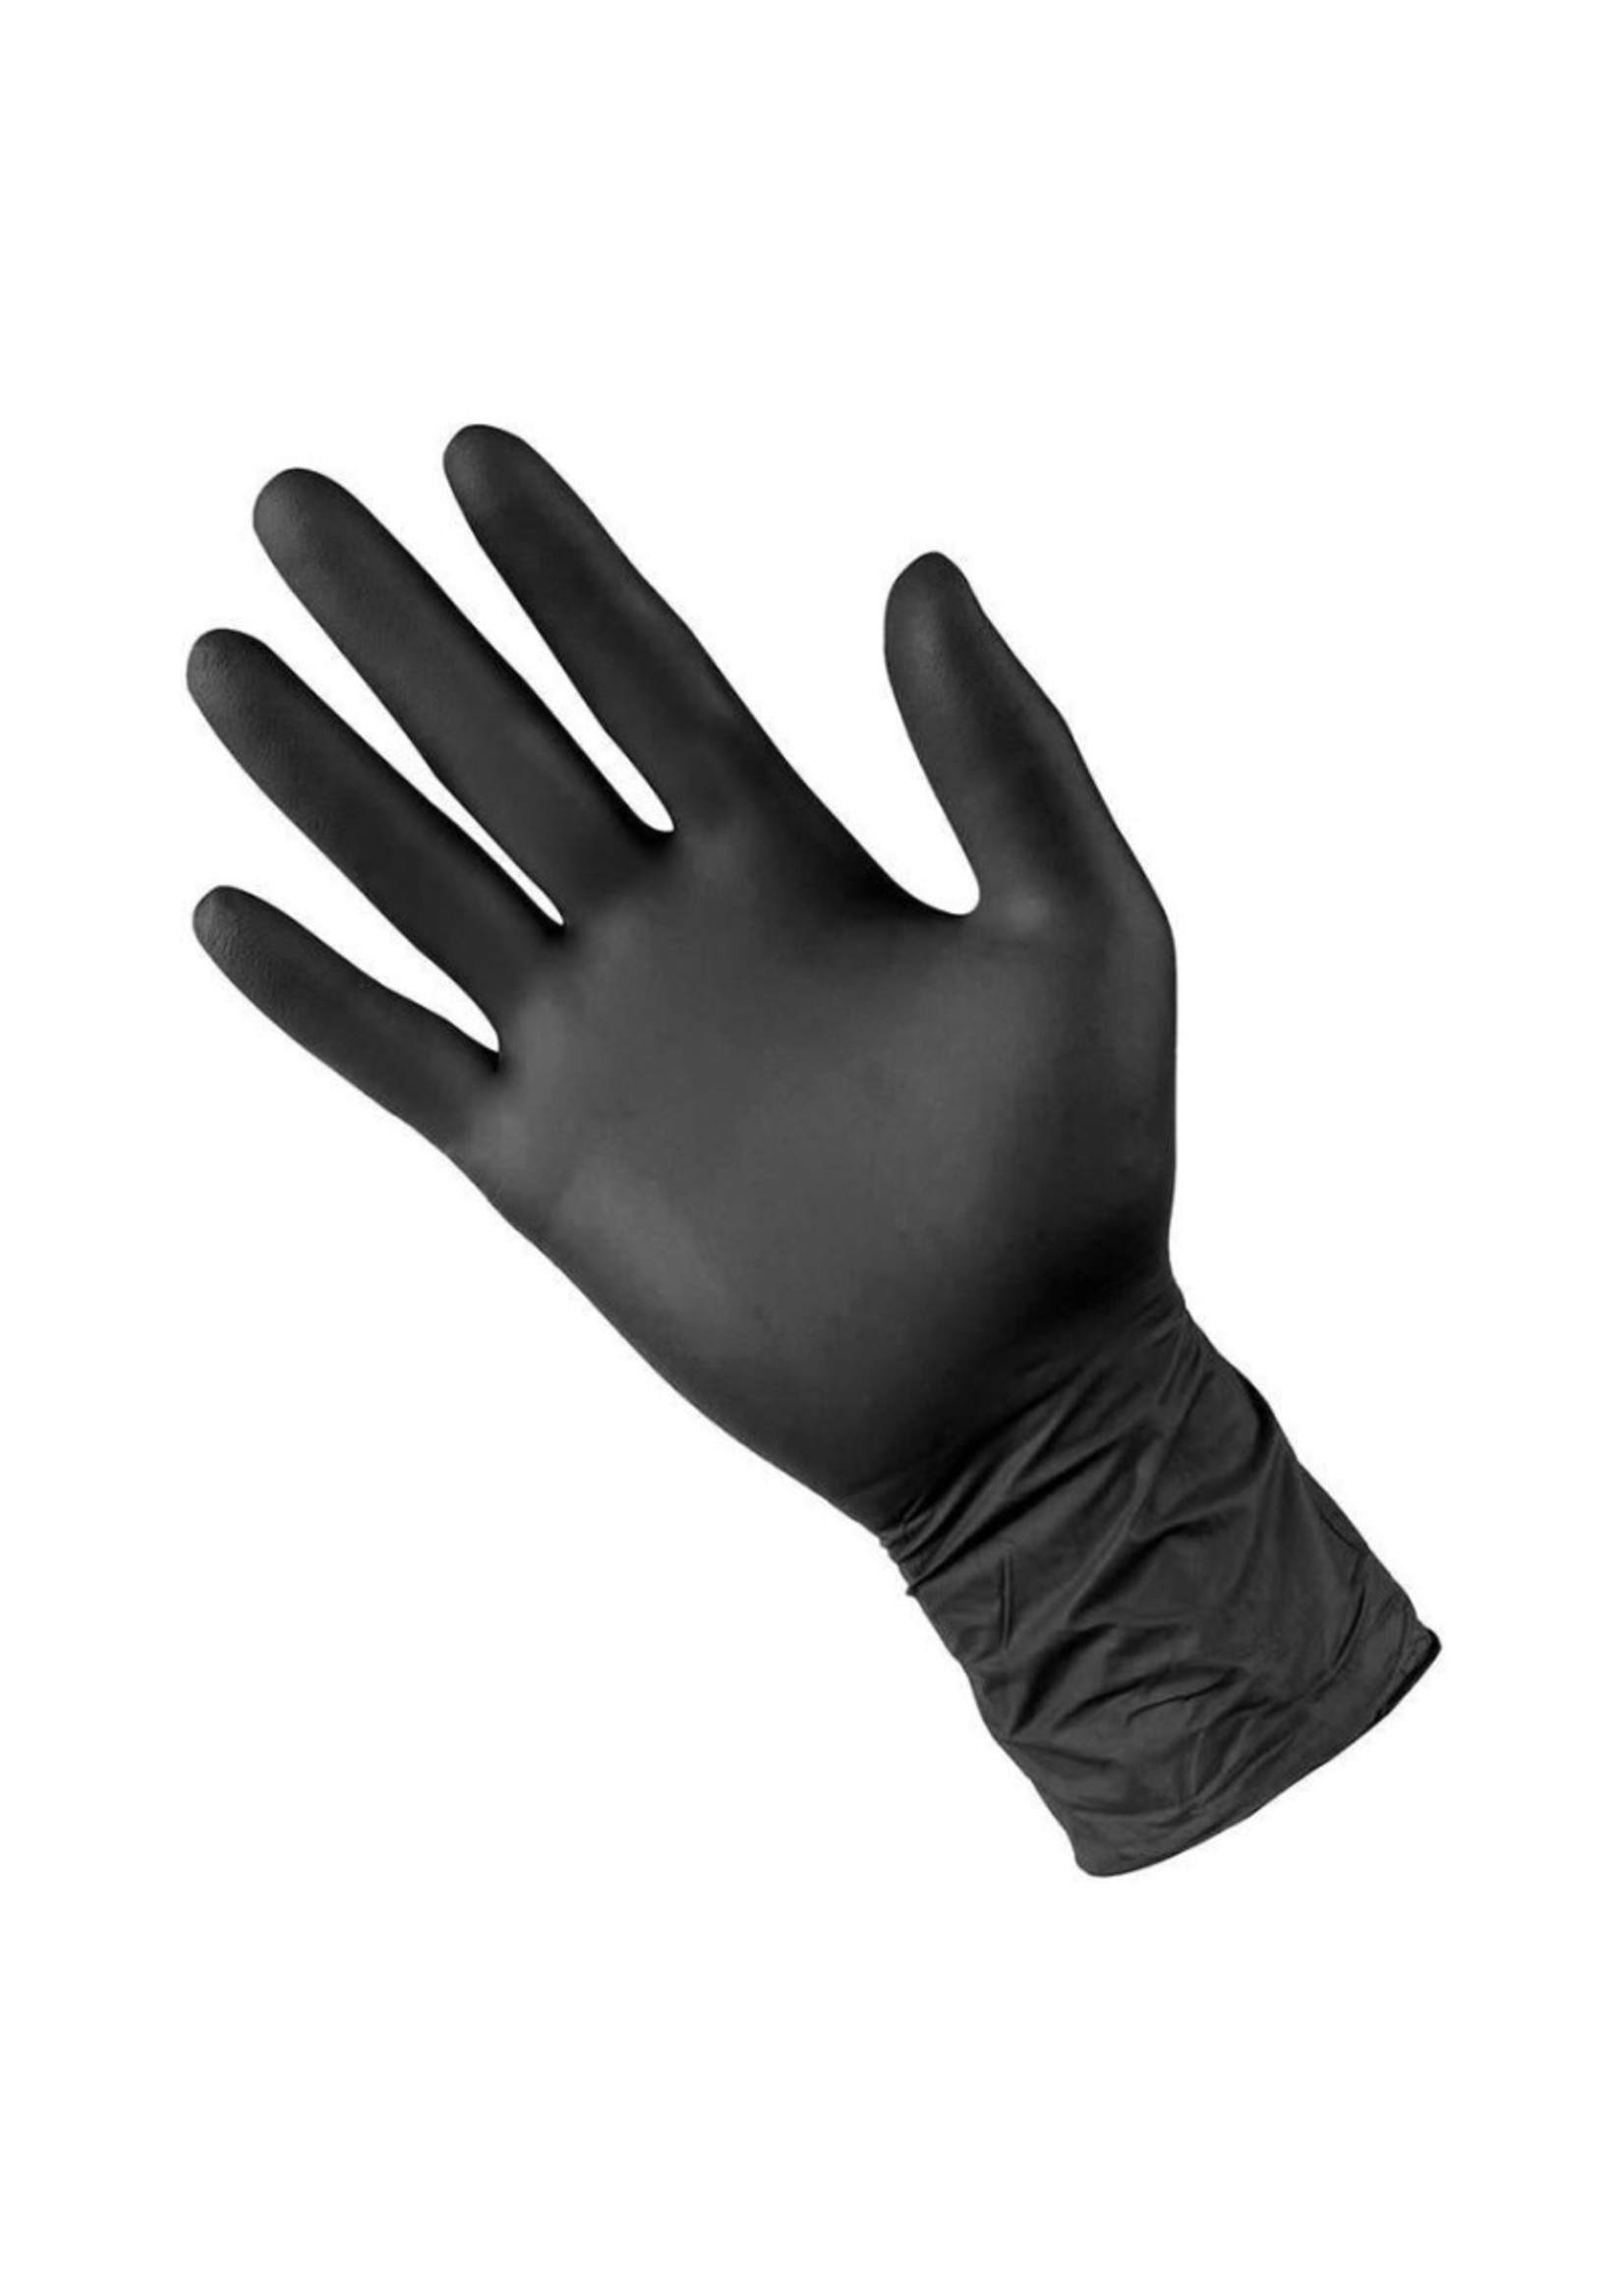 Lilith Salon Latex Gloves - Black - Medium - Pair